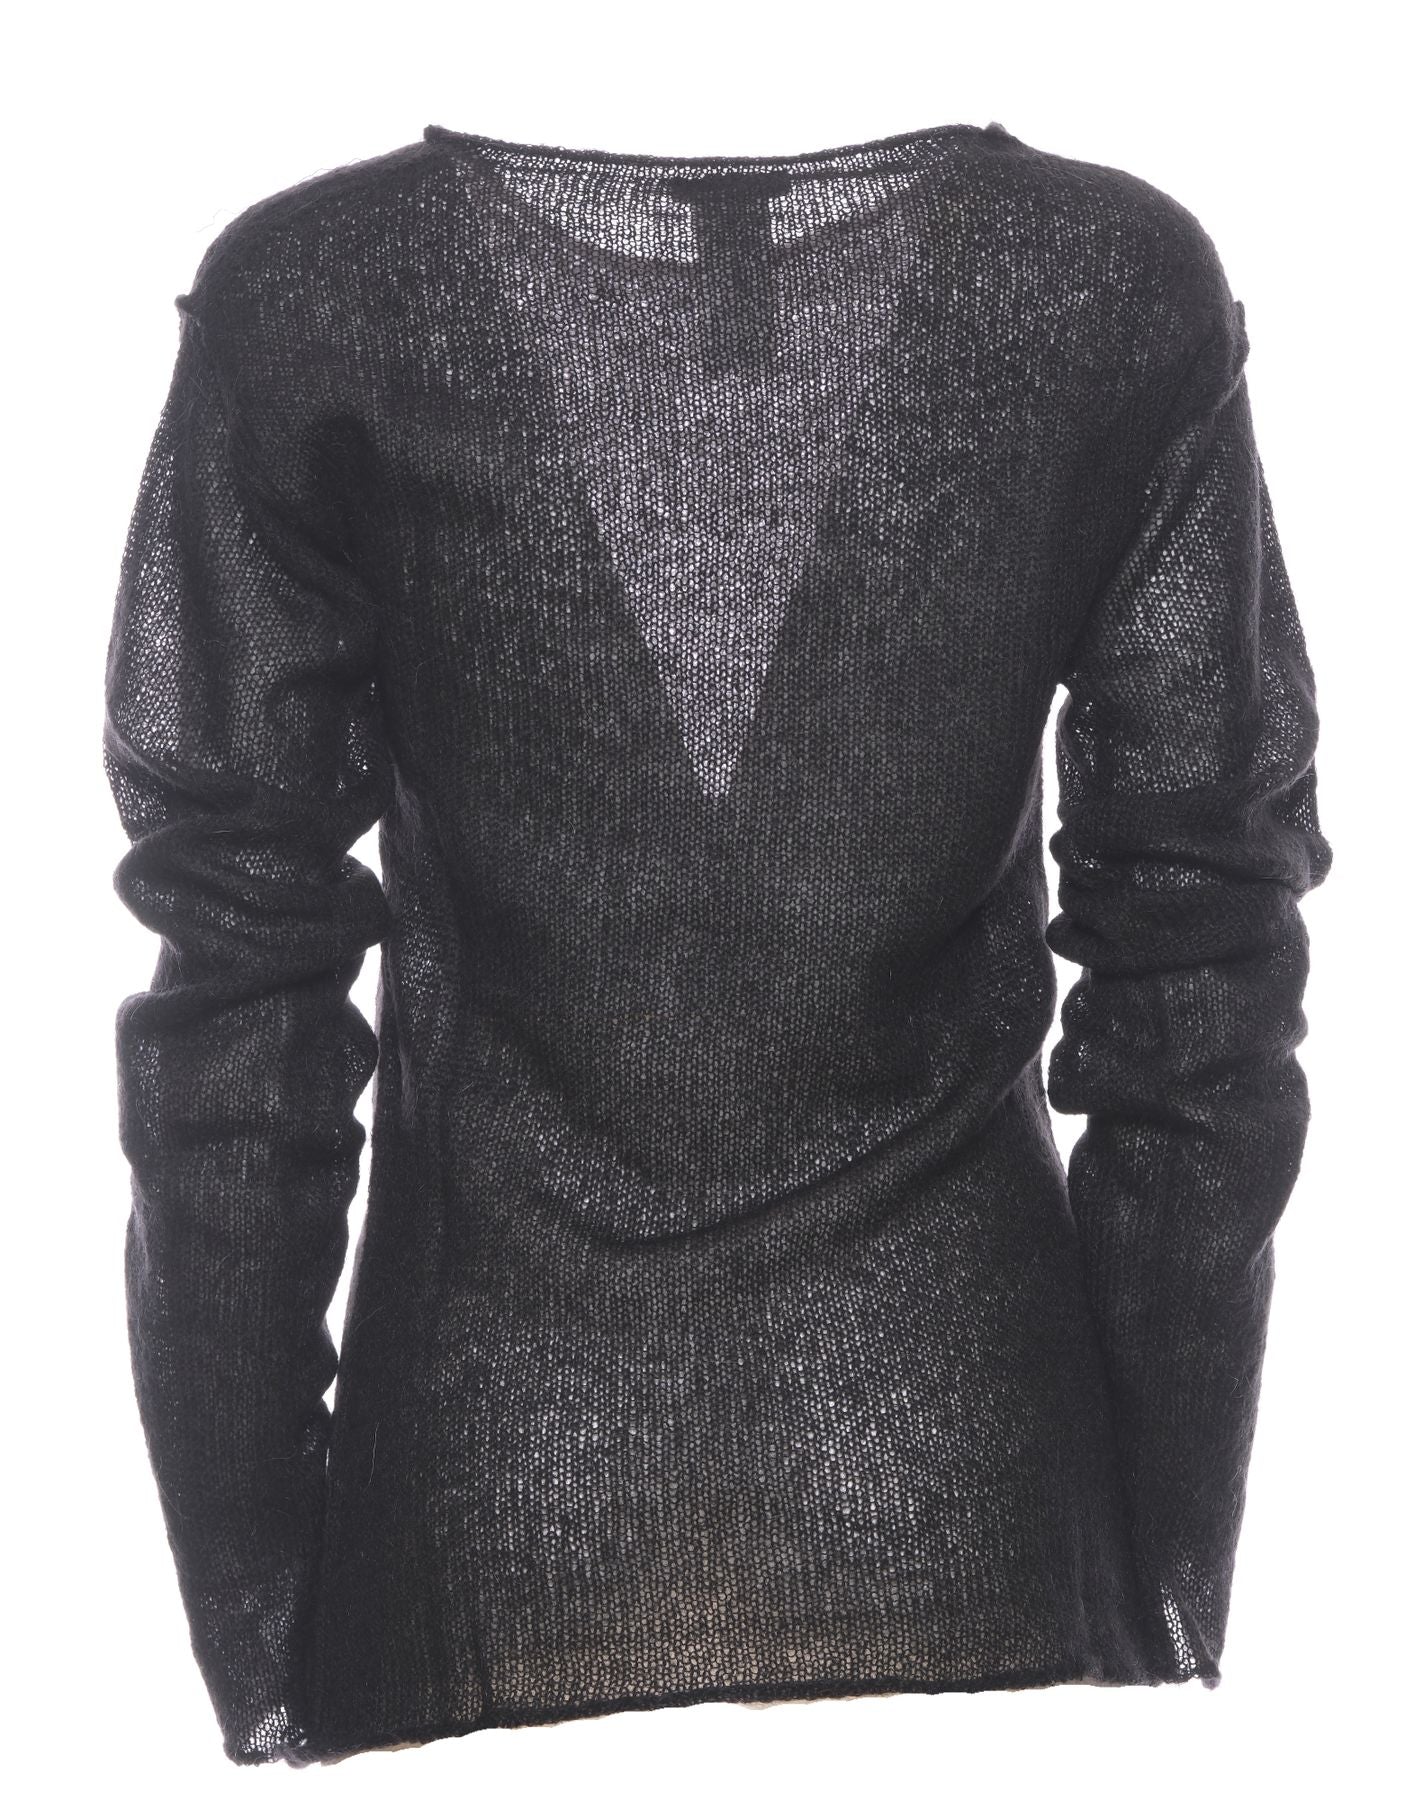 Sweater woman OASI 288 22 BLACK Hanami D'or